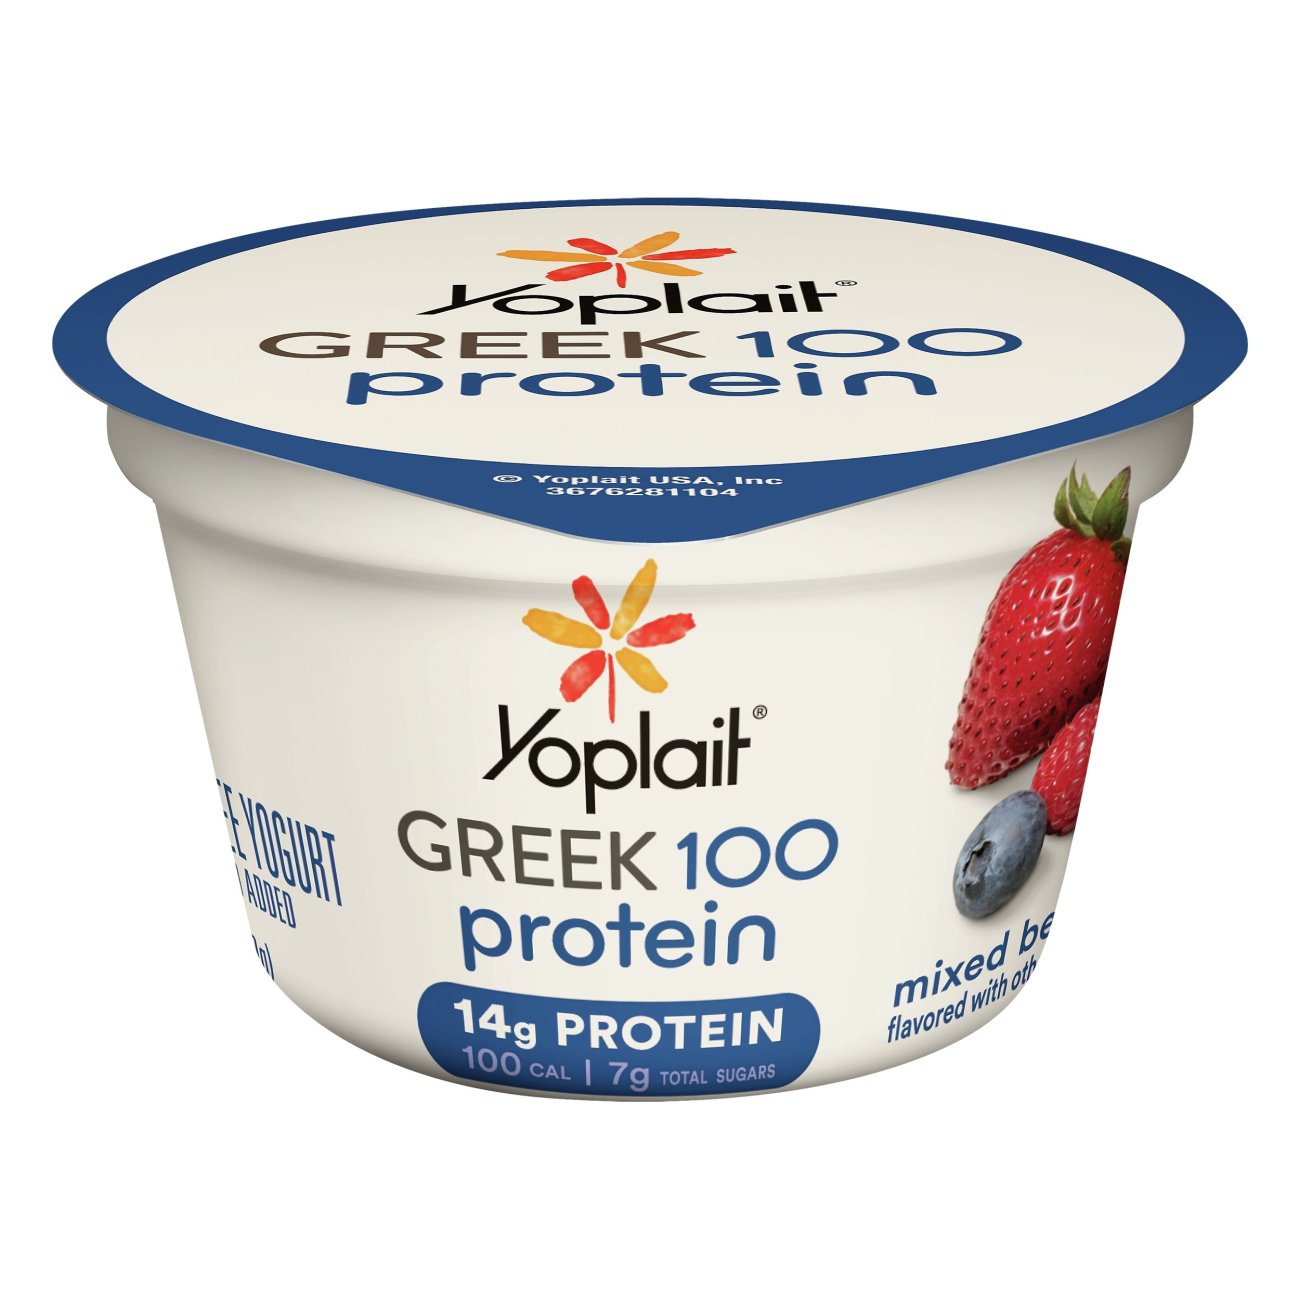 Yoplait Greek 100 Protein Mixed Berry